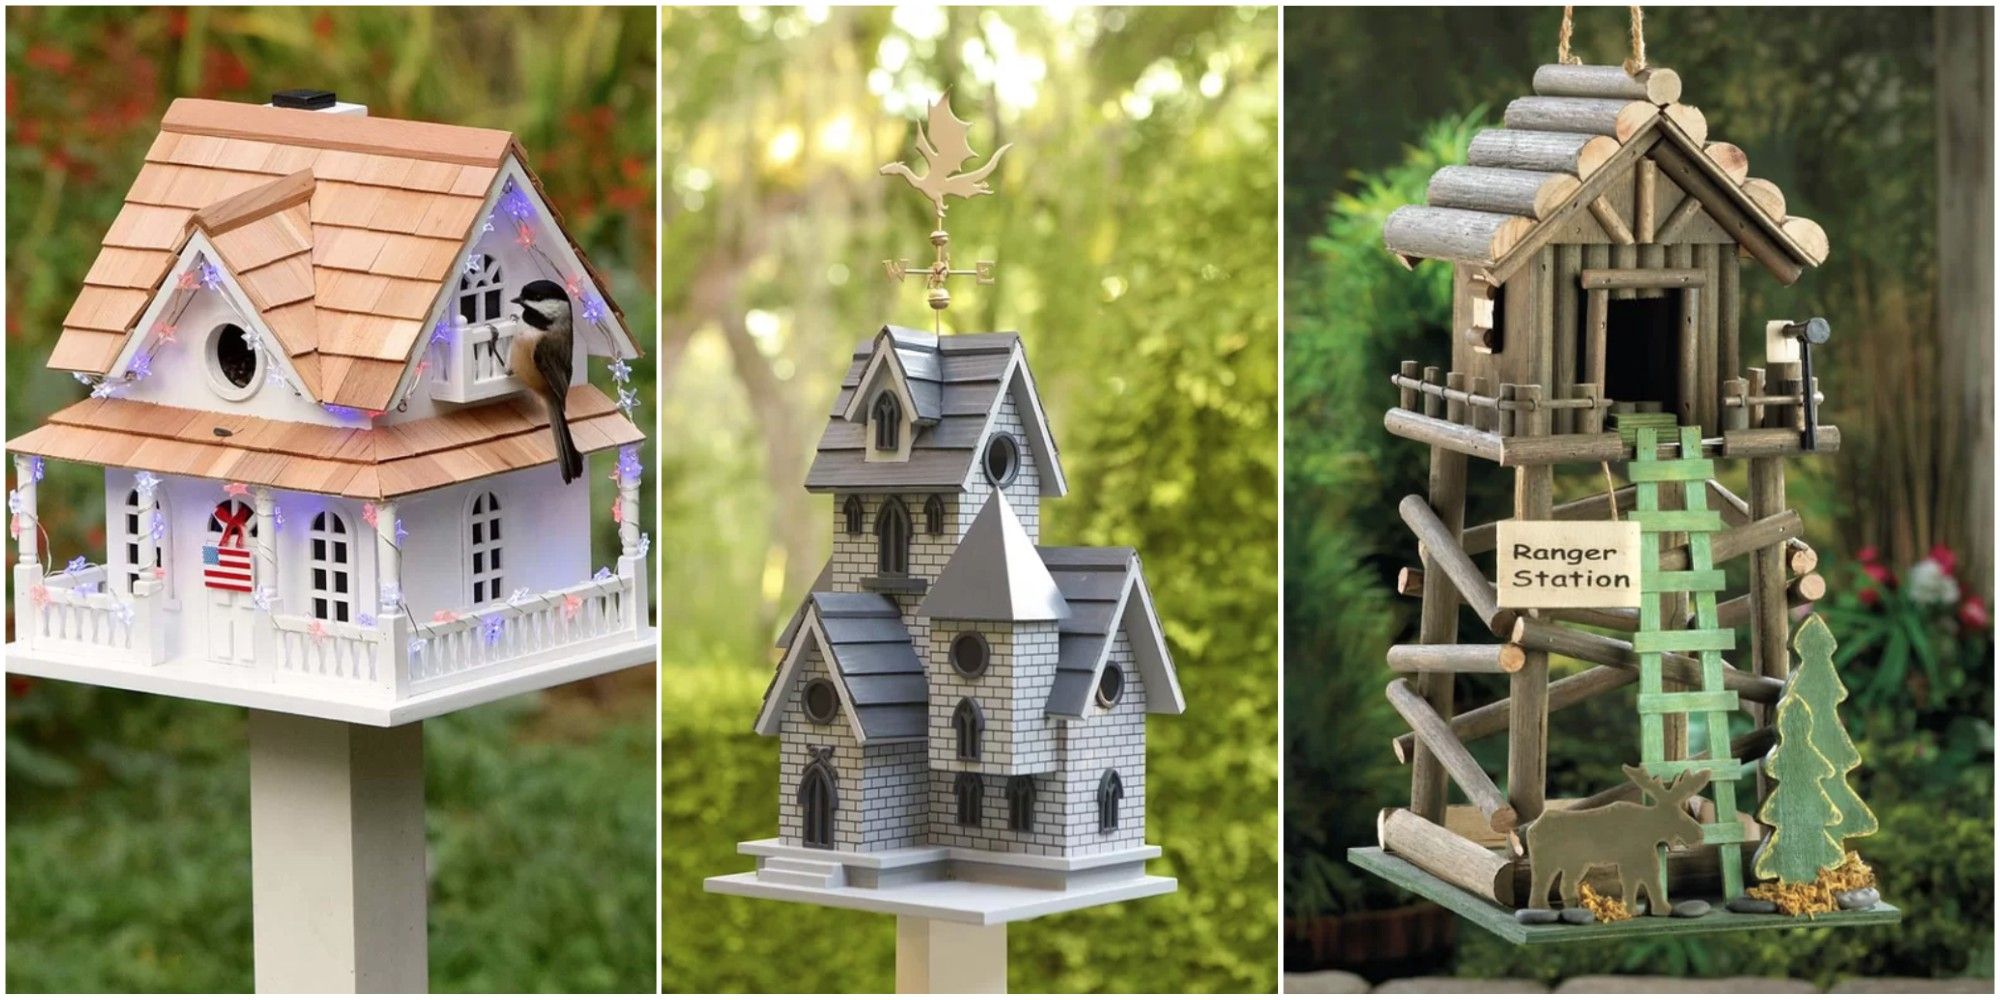 Unique Birdhouses Decorative Bird Houses, Unusual Wooden Bird Houses